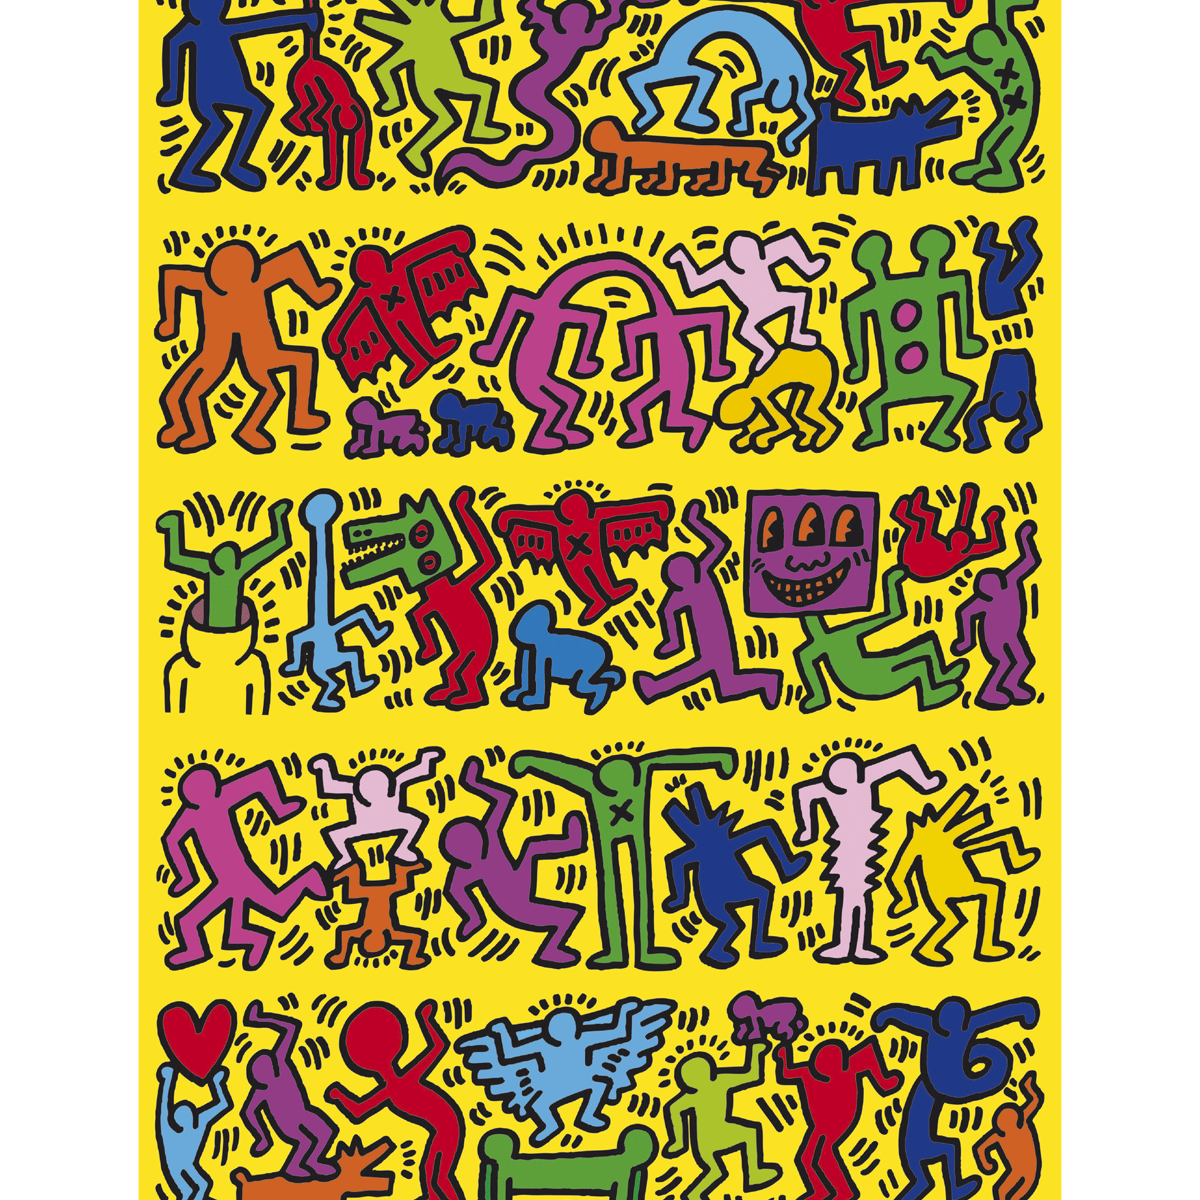 Clementoni puzzle novo art series - keith haring - 1000 pezzi, puzzle adulti - CLEMENTONI